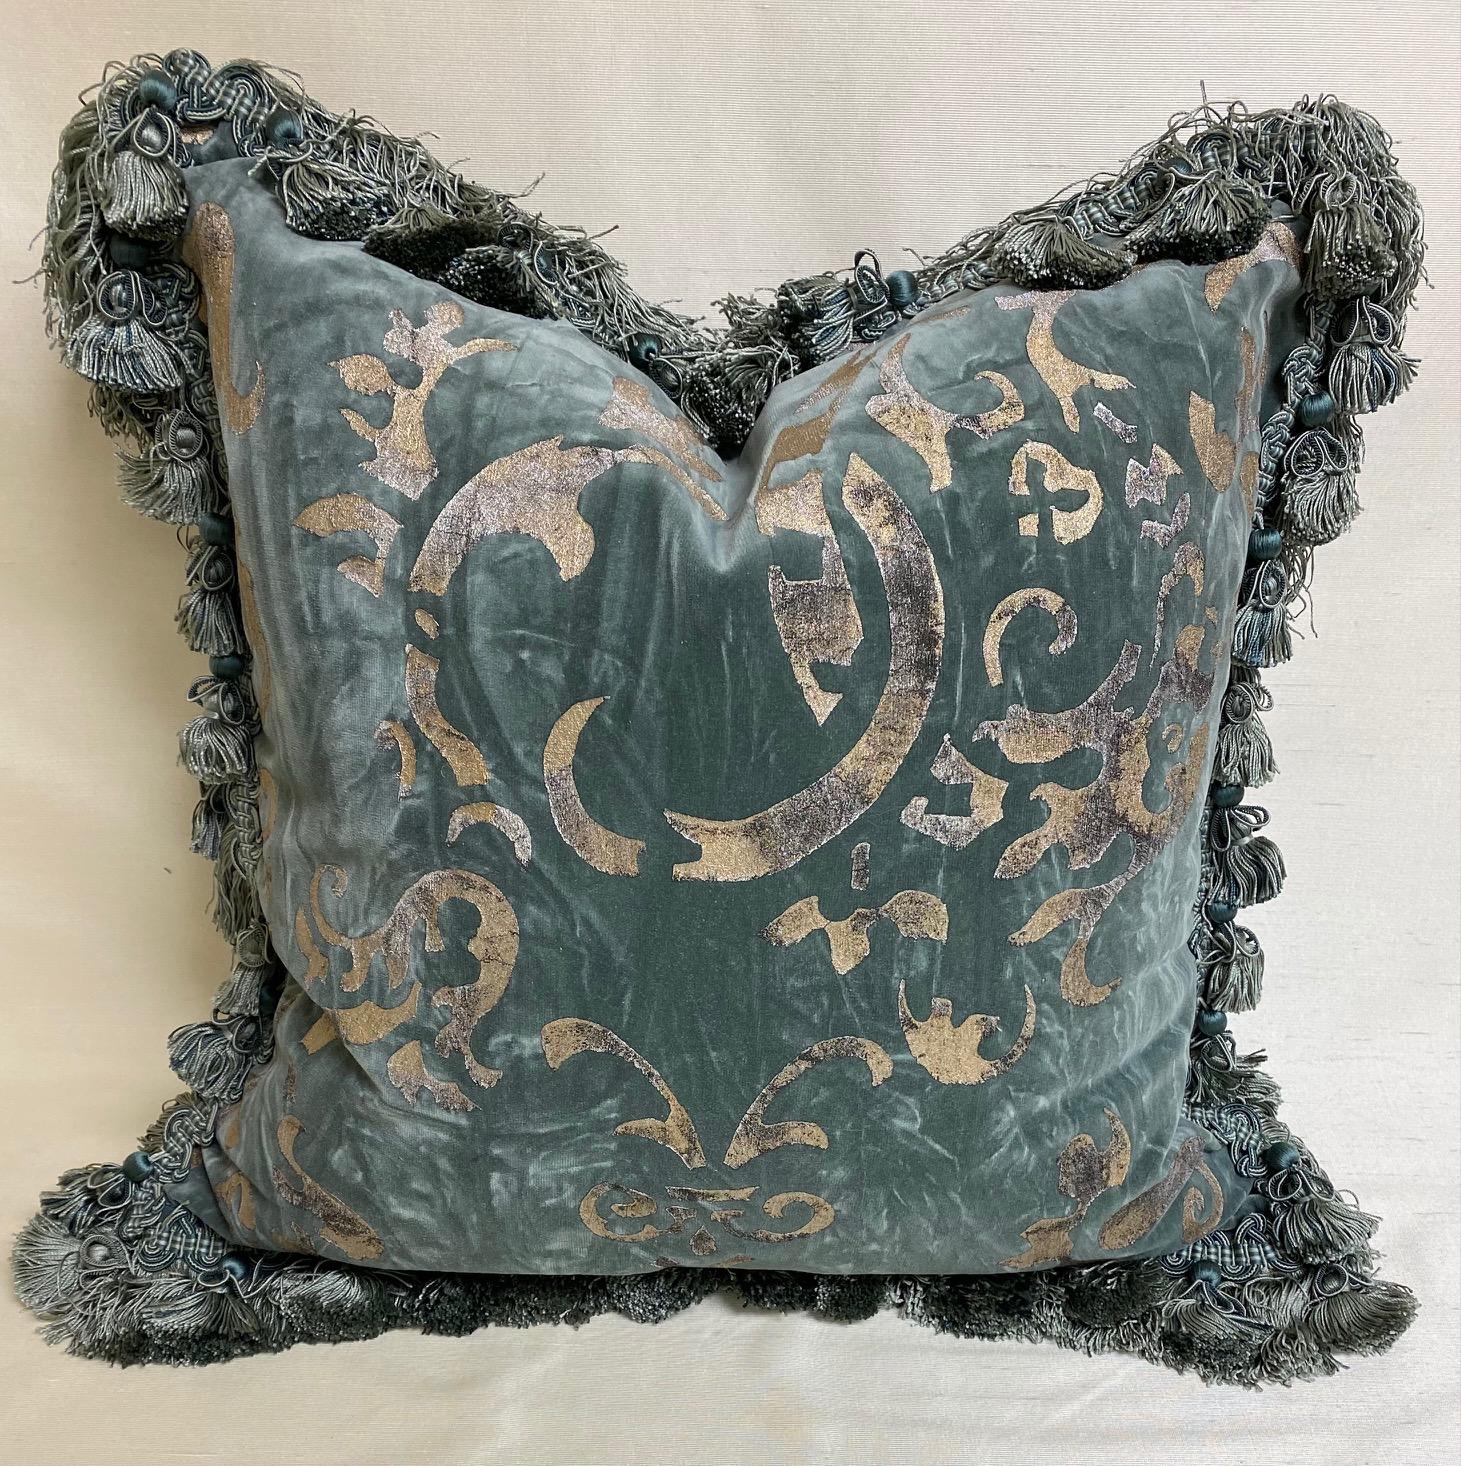 Stunning pair of dark turquoise gaufrage velvet cushions with silk tassel fringe.
Measures: 22